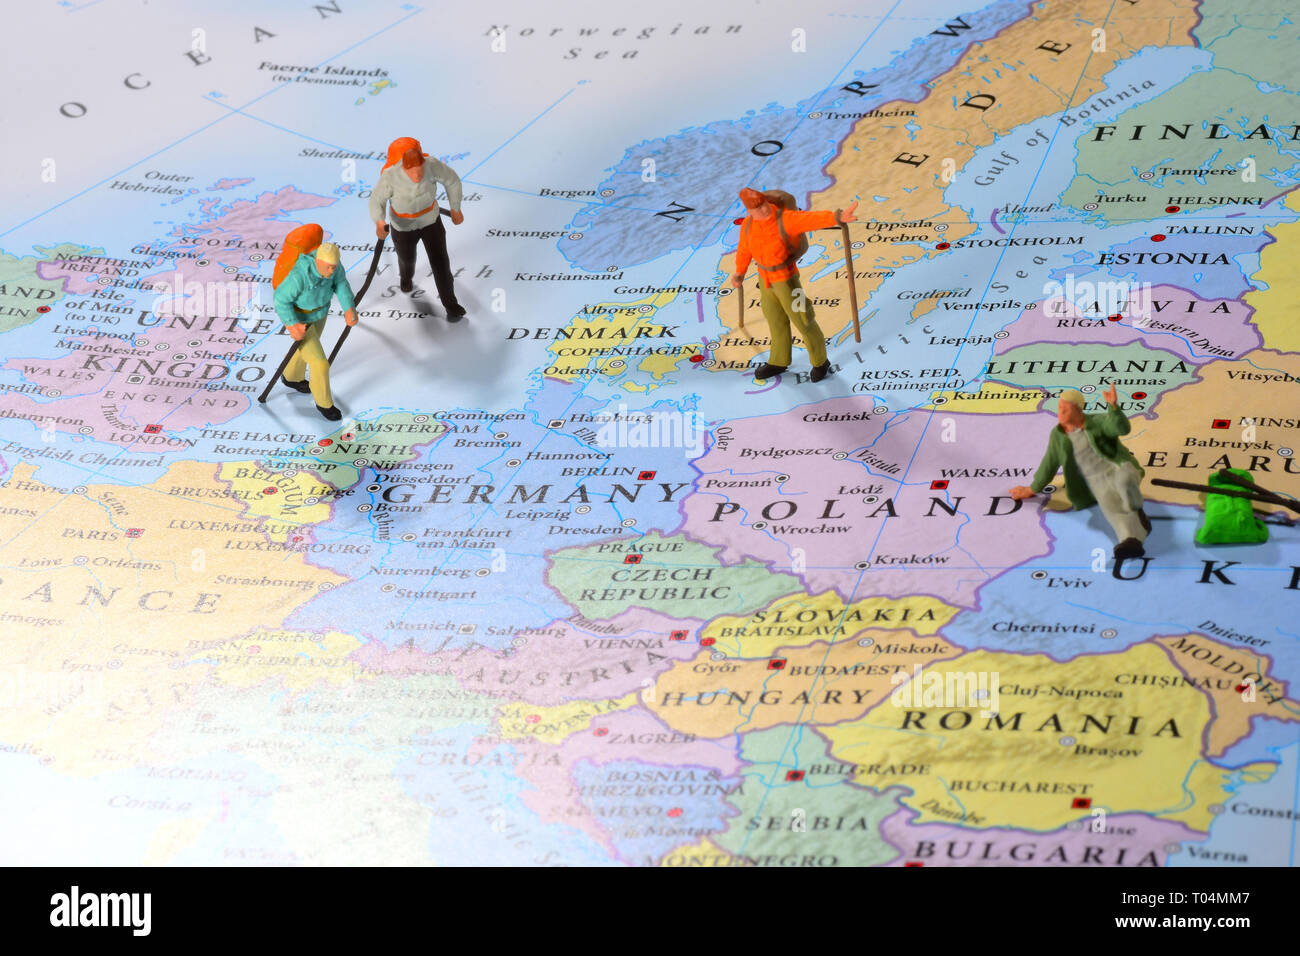 Miniature figures trekking back to Europe Stock Photo